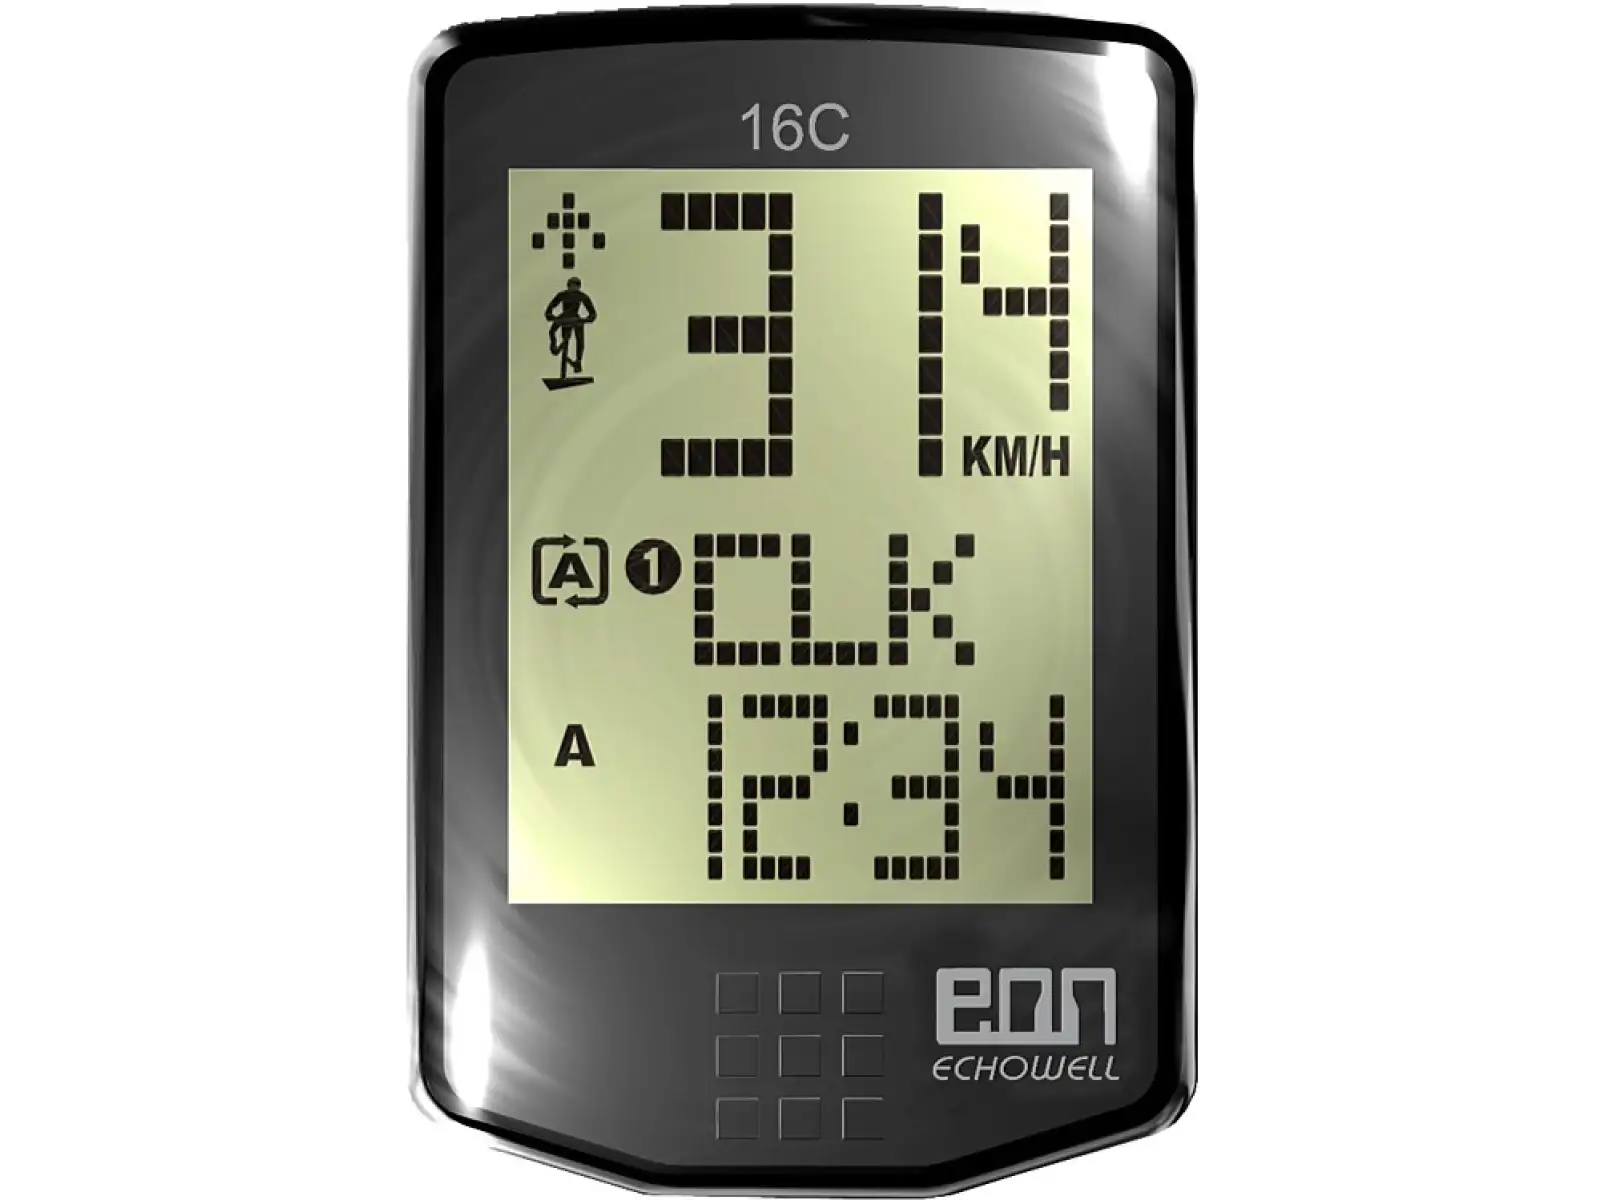 Echowel Eon Touch 16C computer